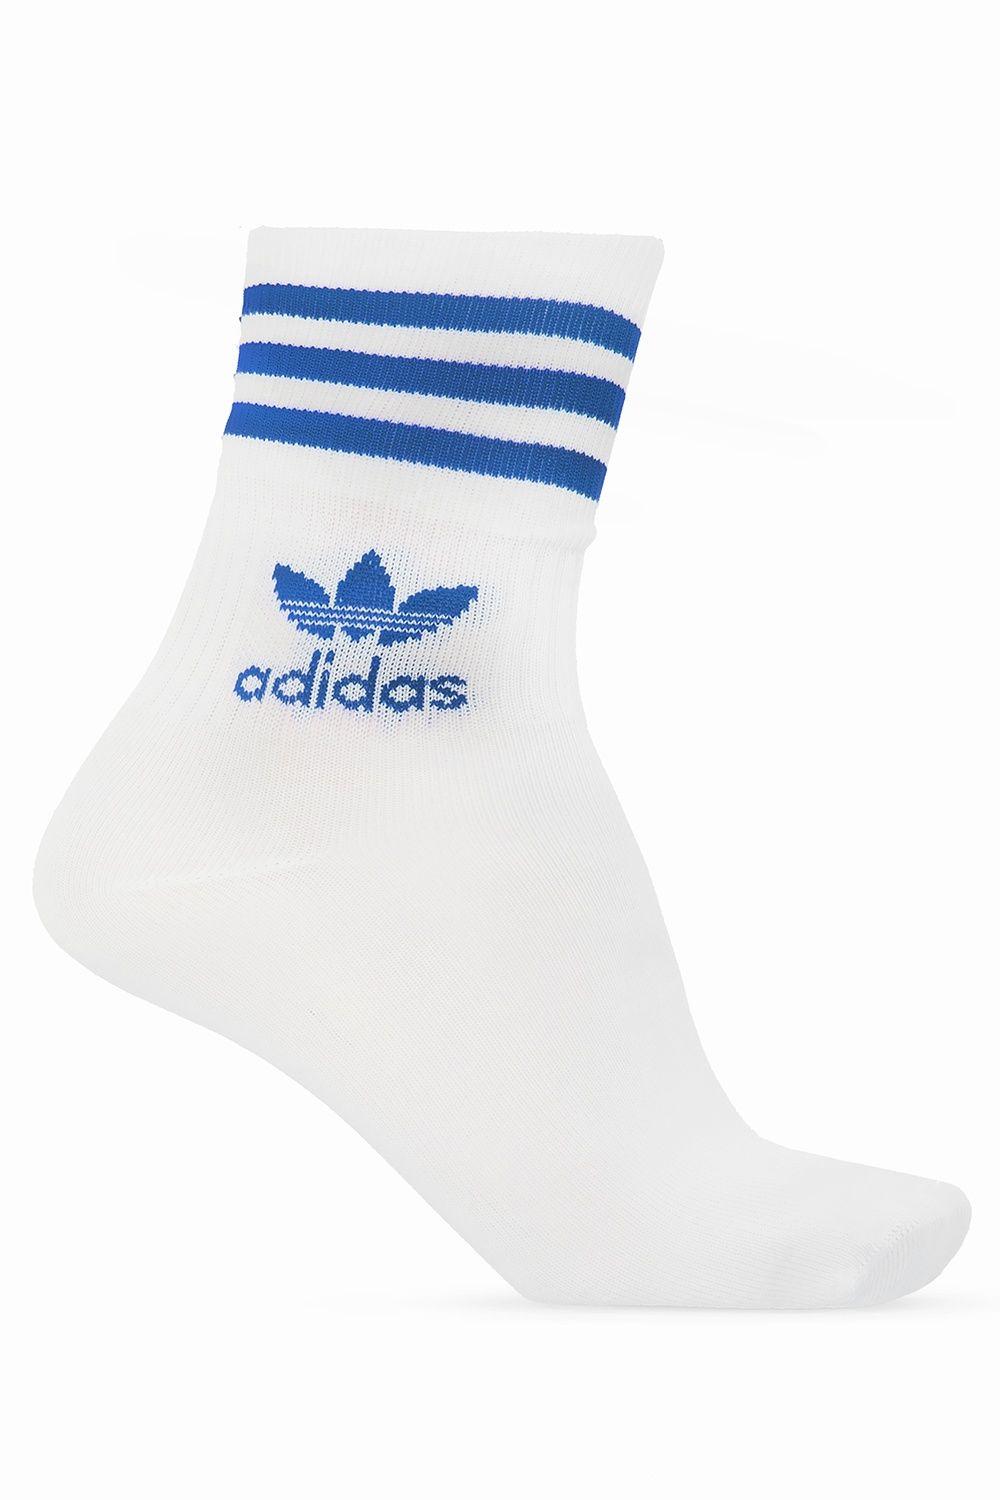 adidas Originals Logo Socks 3-pack in Blue | Lyst